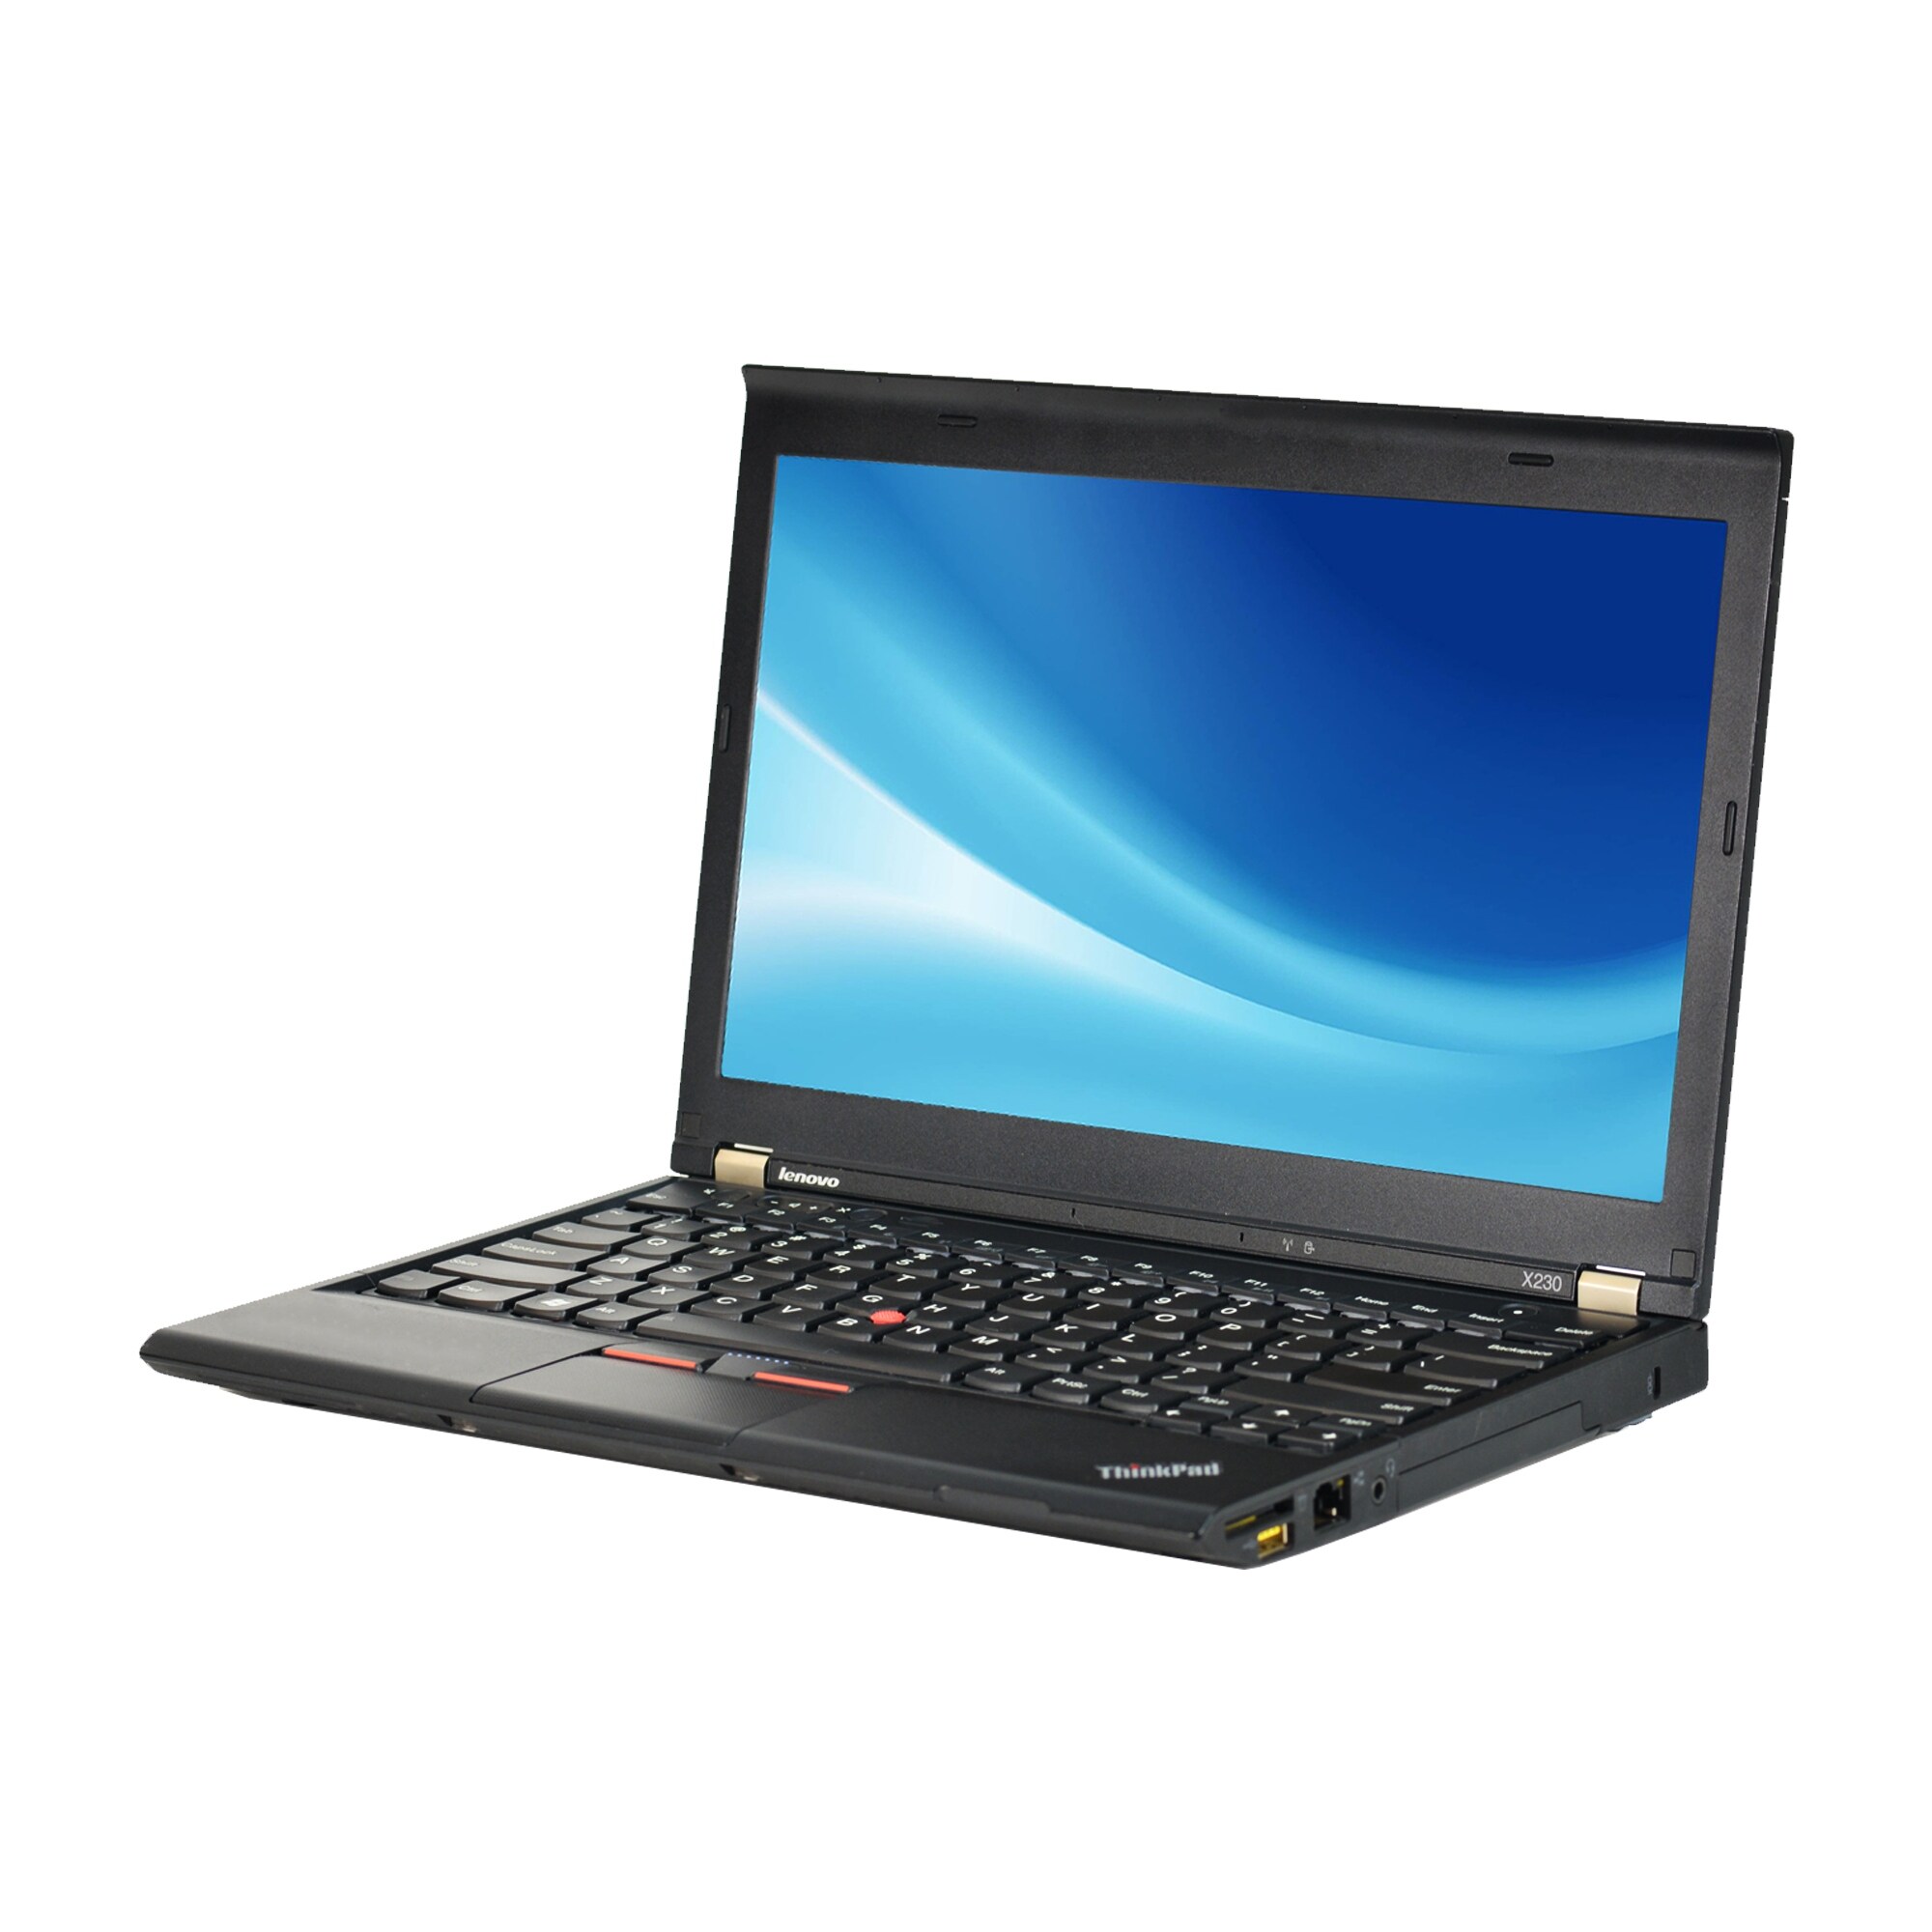 Lenovo ThinkPad X230 Intel Core i5-3320M 2.6GHz 3rd Gen CPU 16GB RAM 256GB  SSD Windows 10 Pro 12.5-inch Laptop (Refurbished)